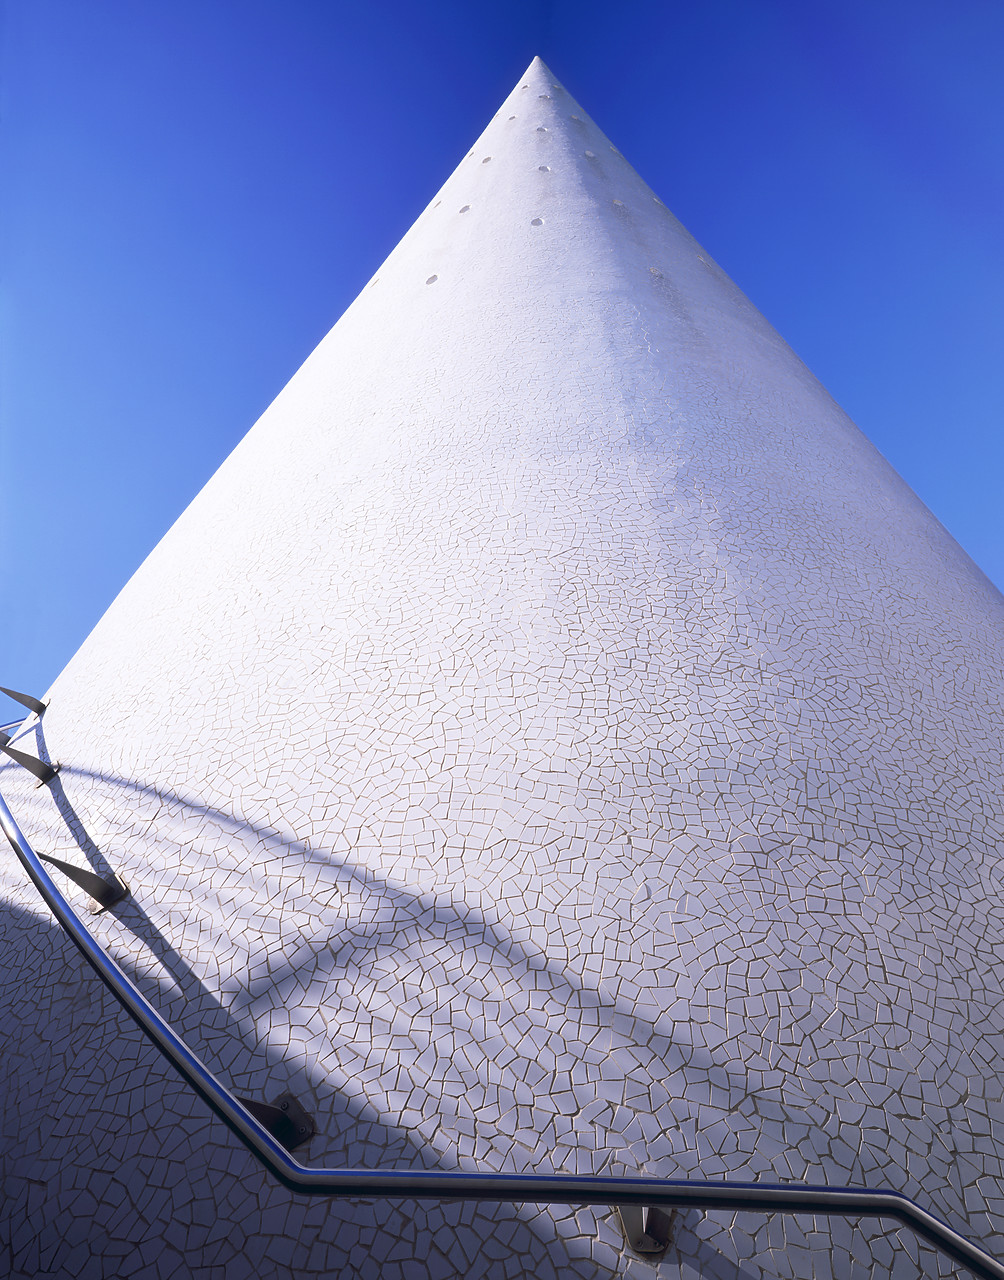 #050018-1 - Mosaic Cone at City of Arts & Sciences, Valencia, Spain